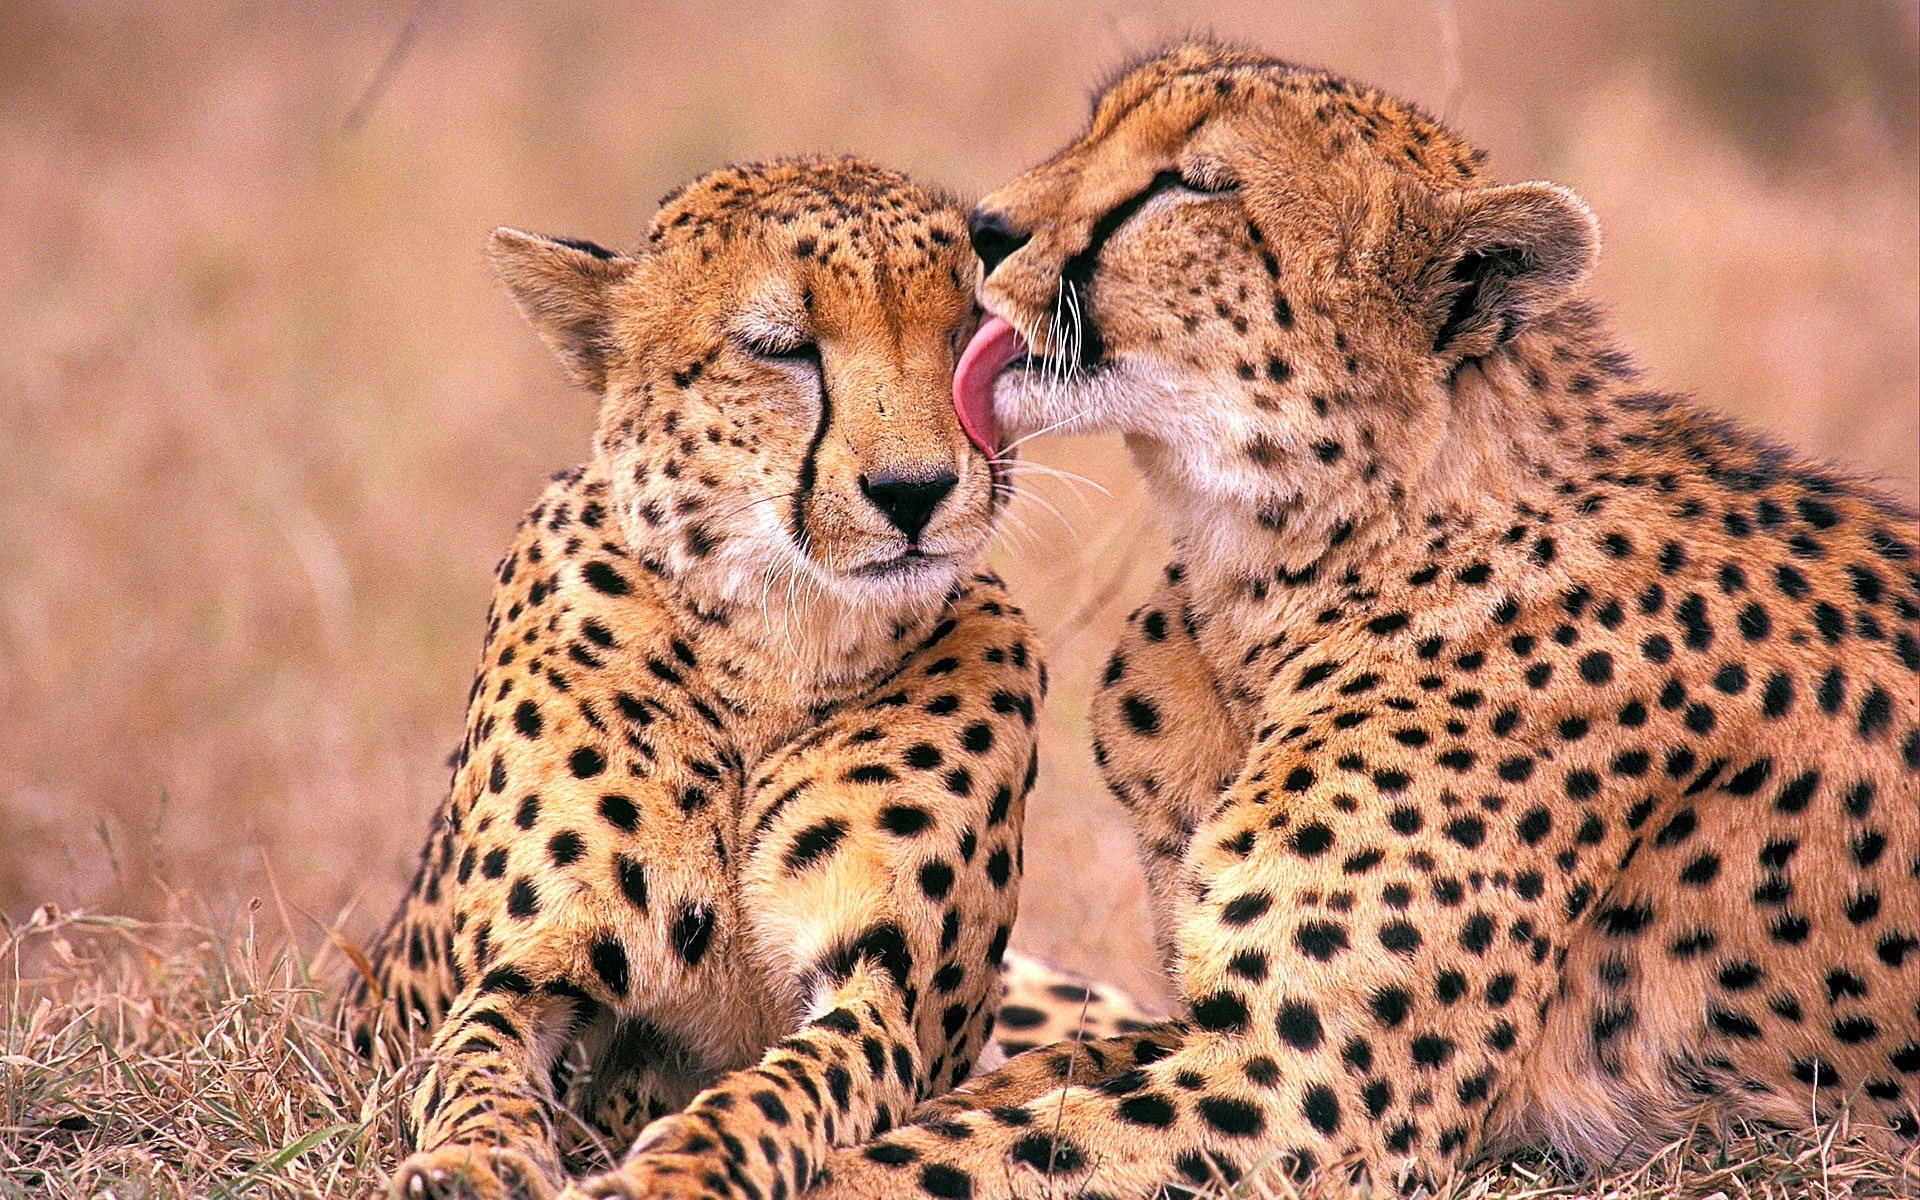 South African Cheetahs7990418661 - South African Cheetahs - South, Havanese, Cheetahs, African